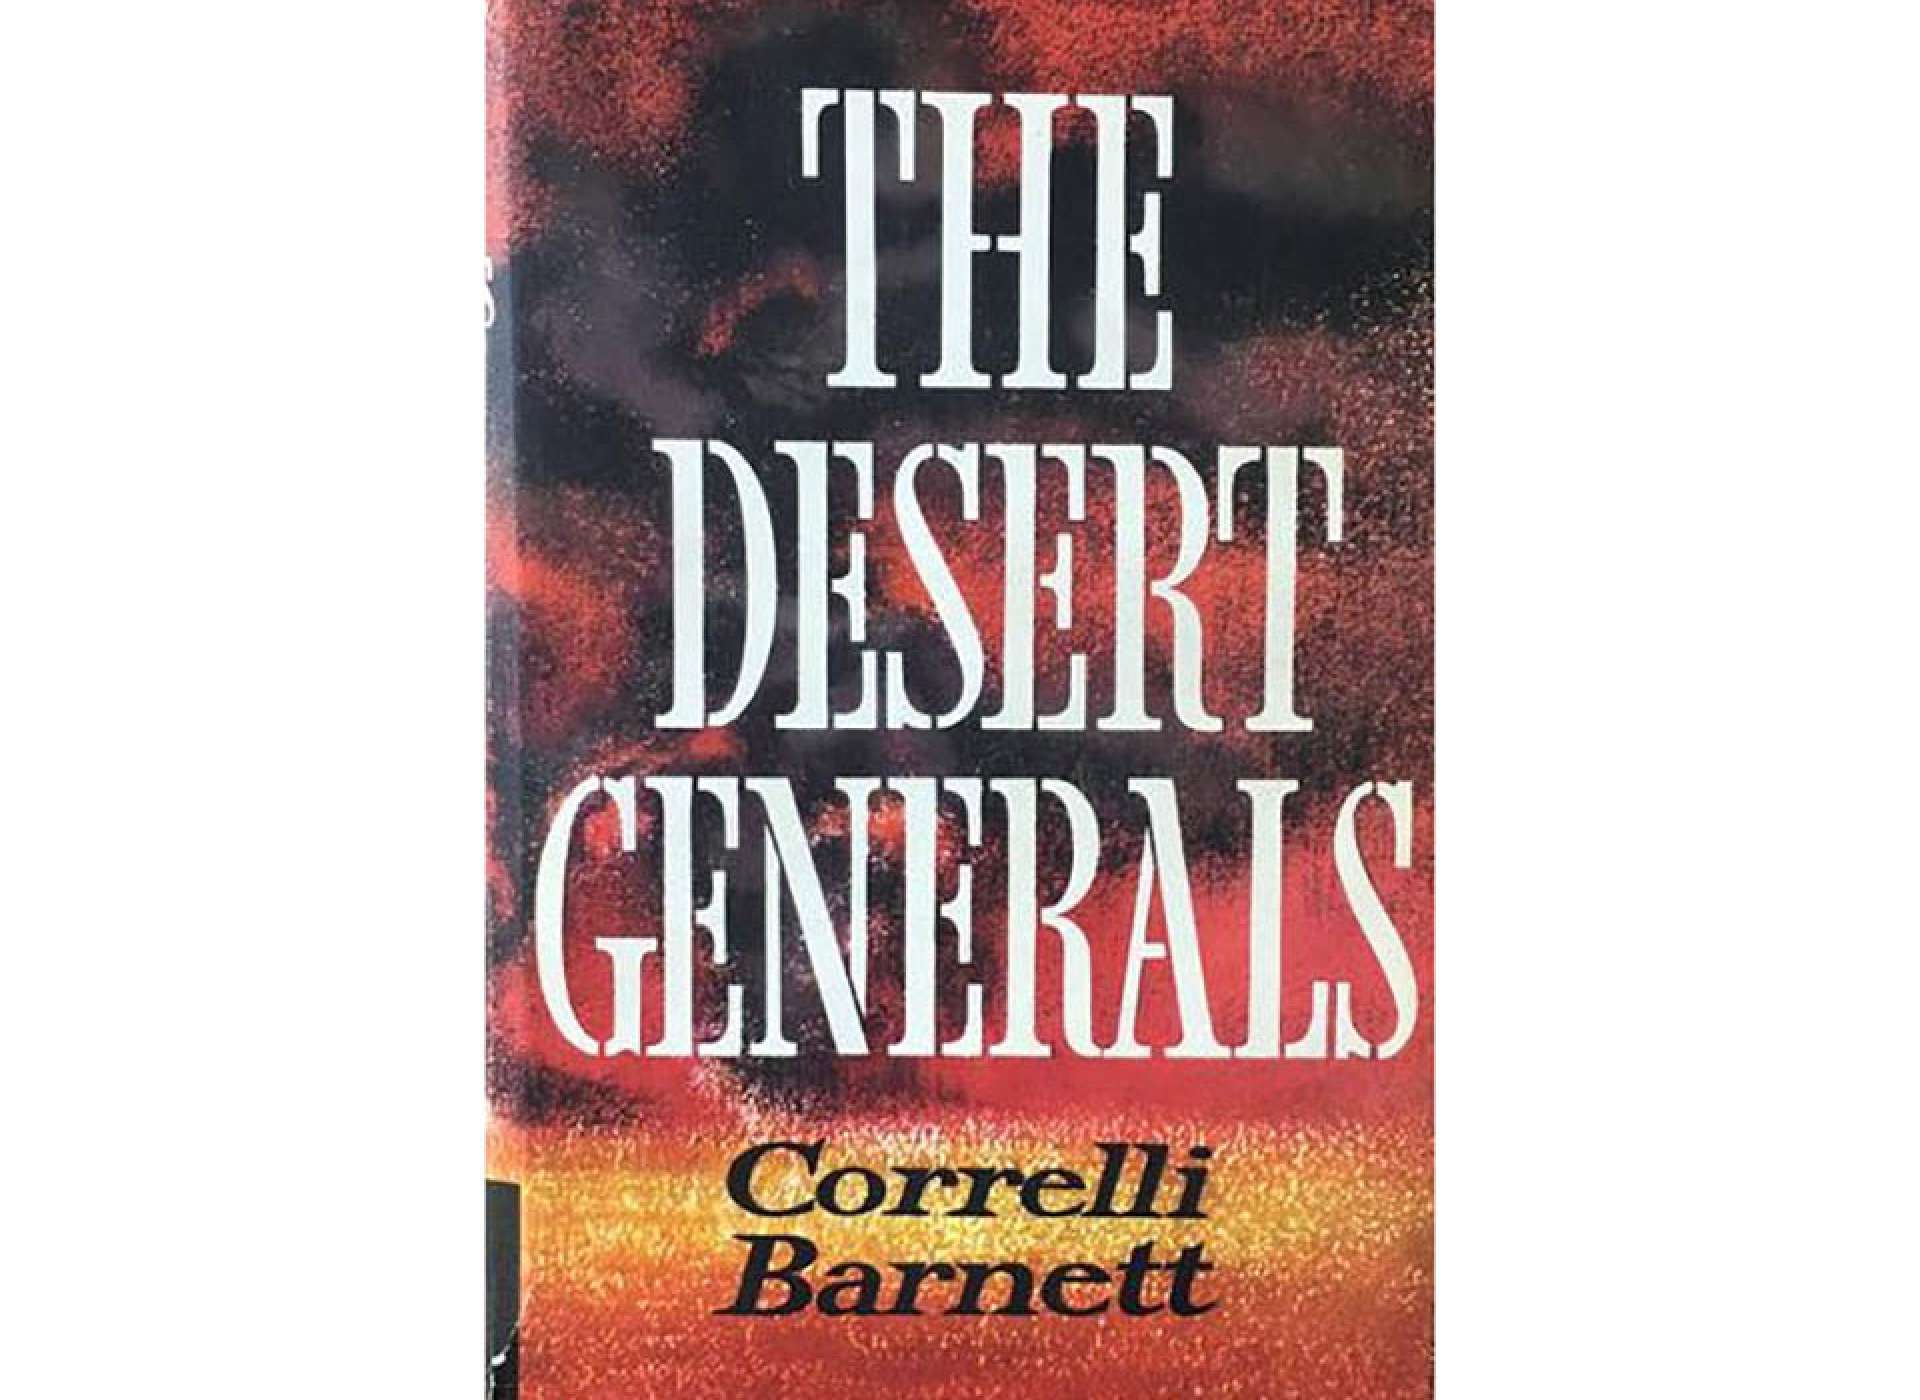 The Desert Generals. Courtesy of Amazon.com